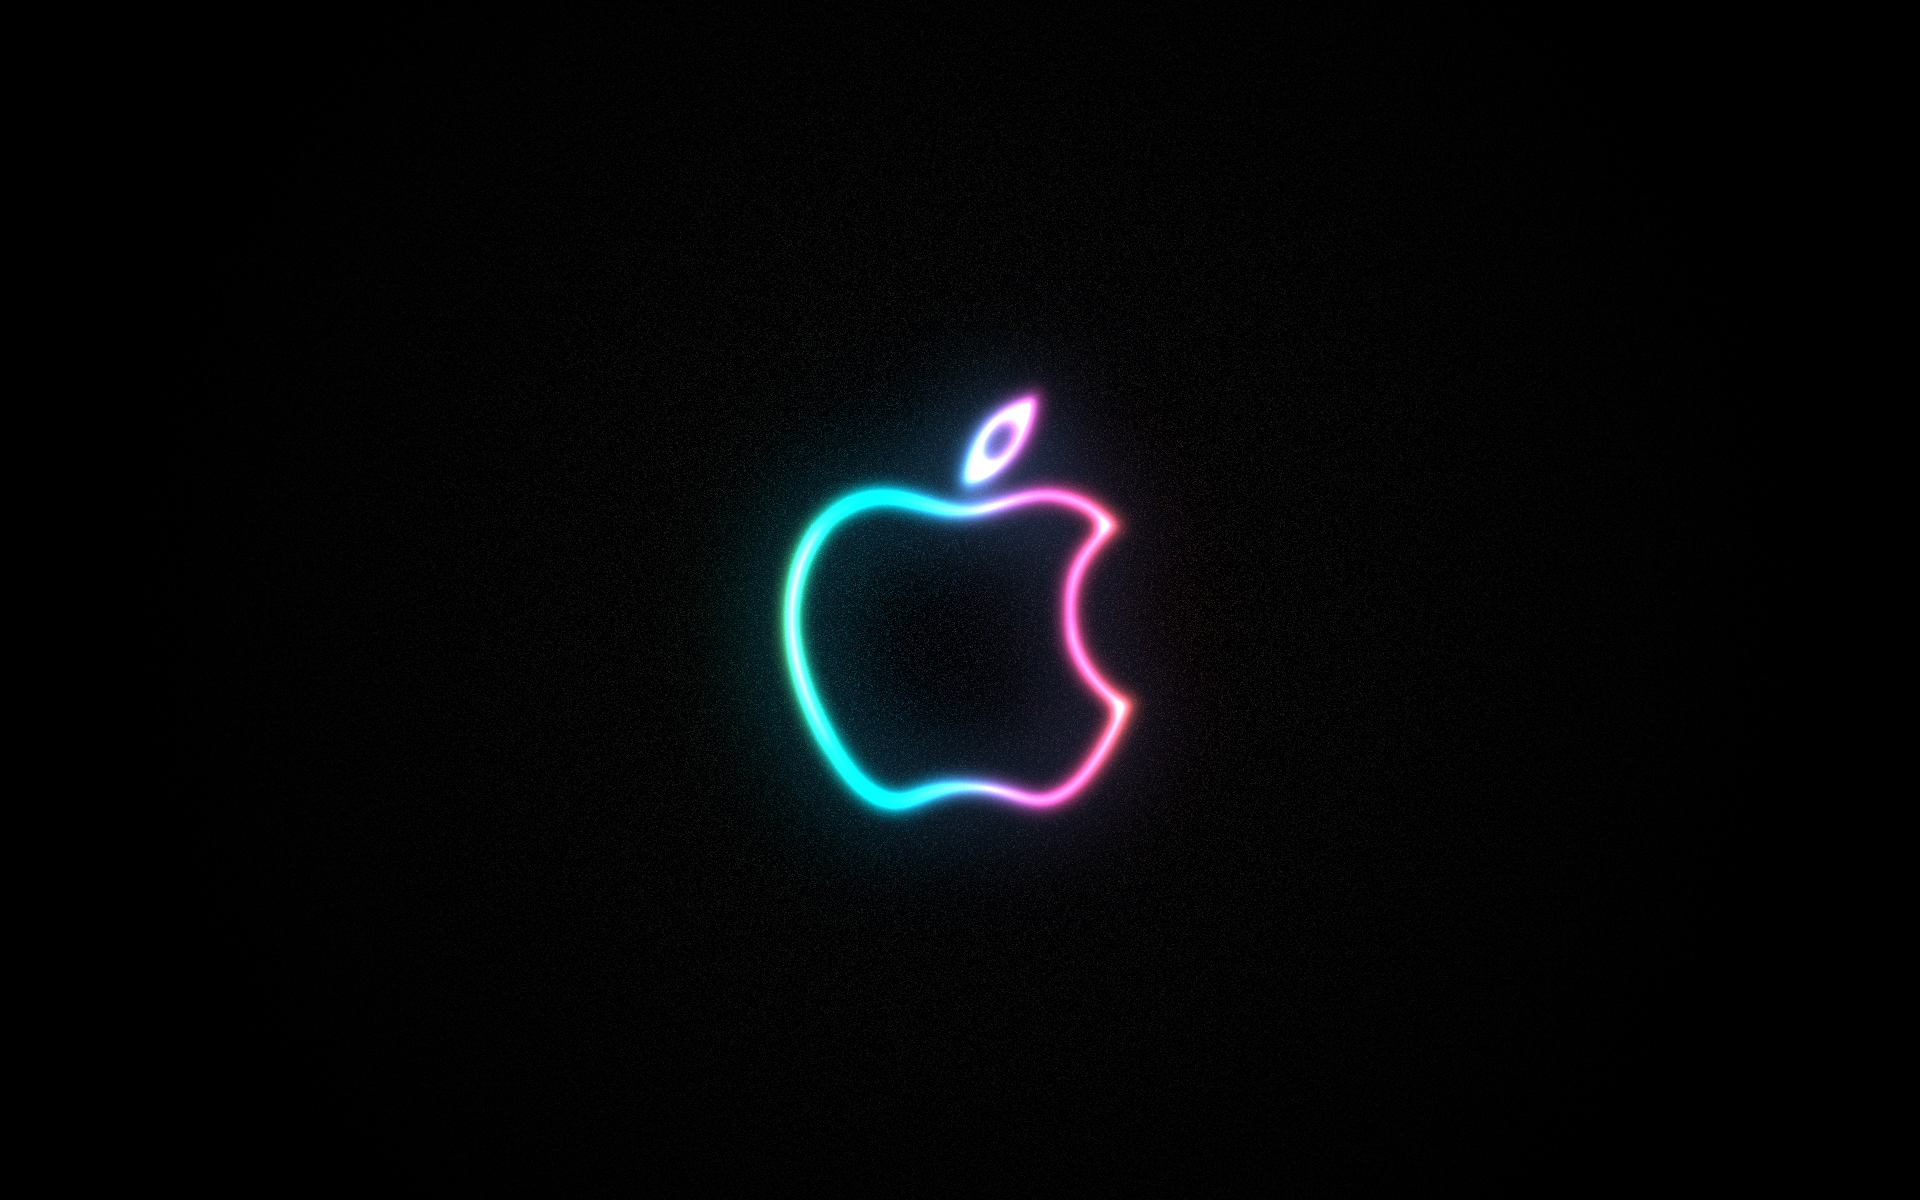 4th set of apple logo wallpaper: MacOS